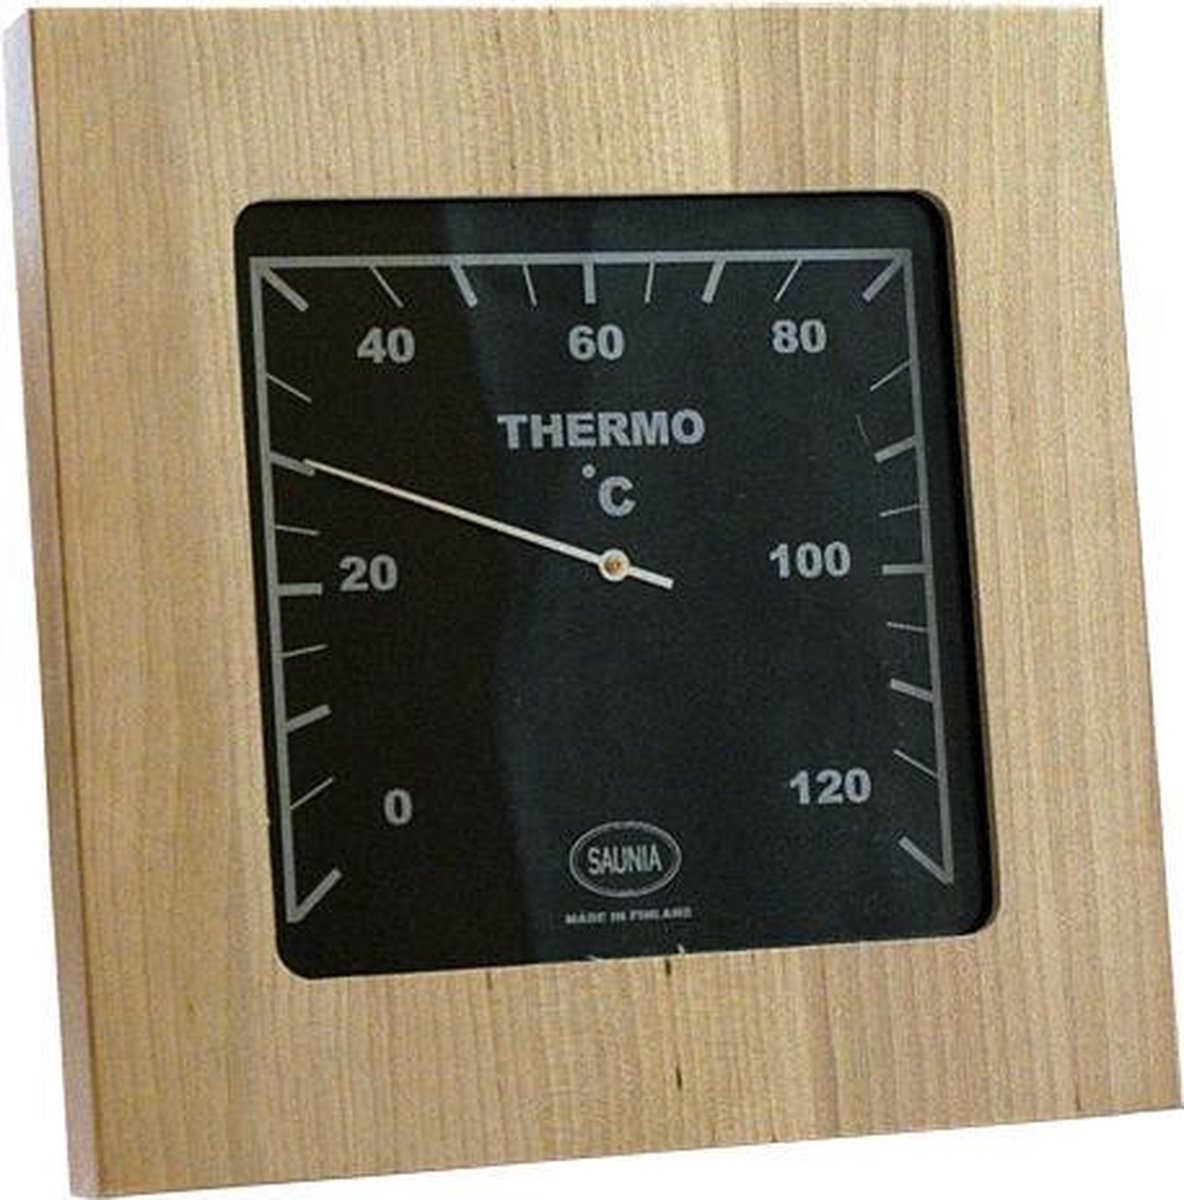 Sauna thermometer modern design - saunia